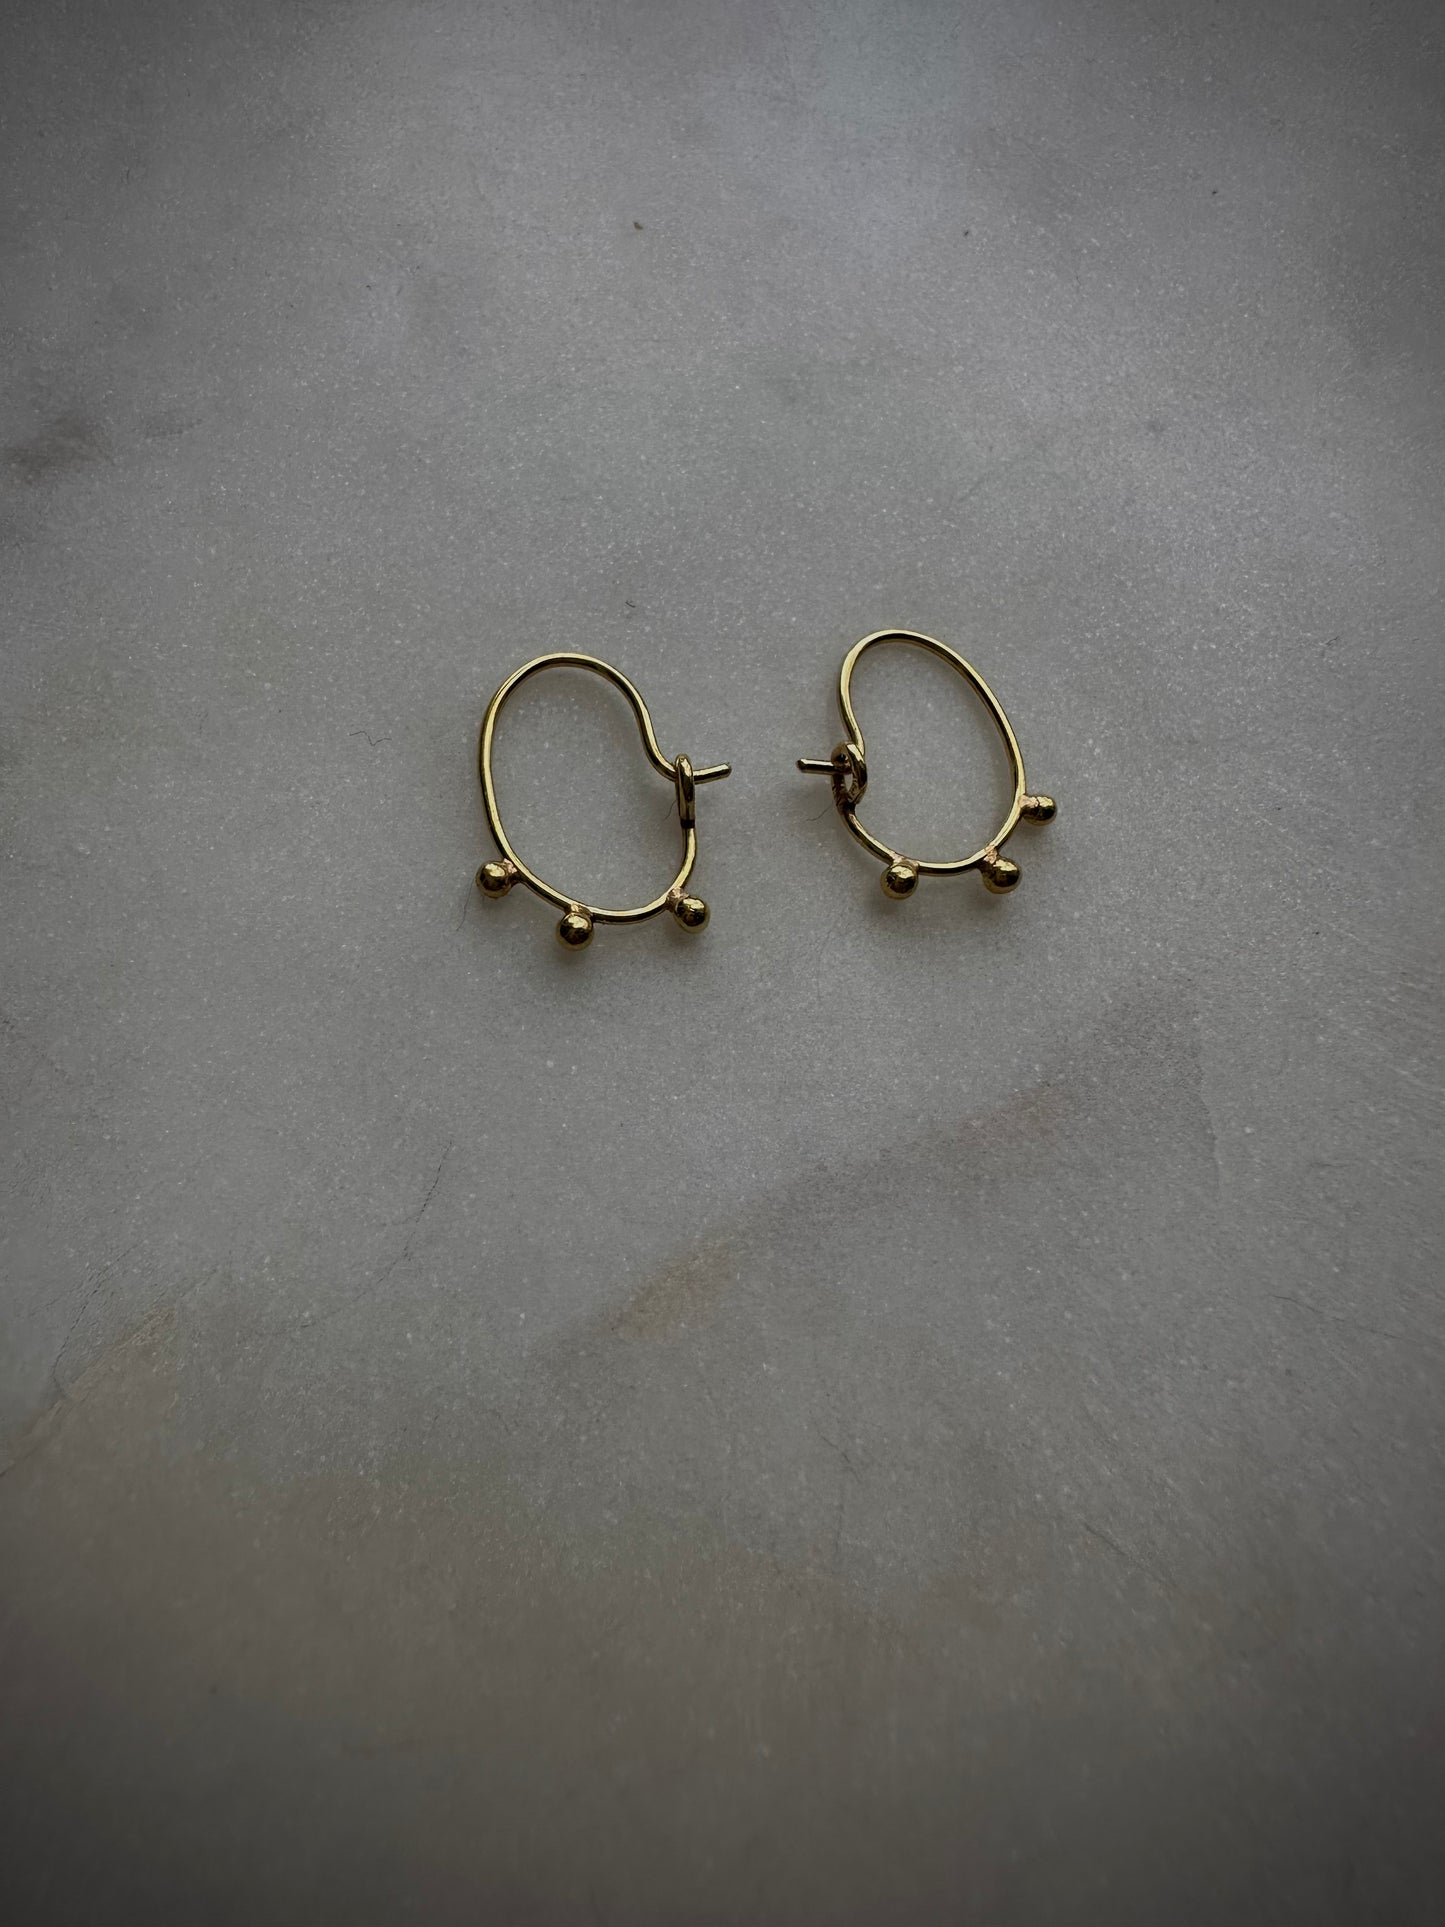 Solid 18k fairtrade gold earrings